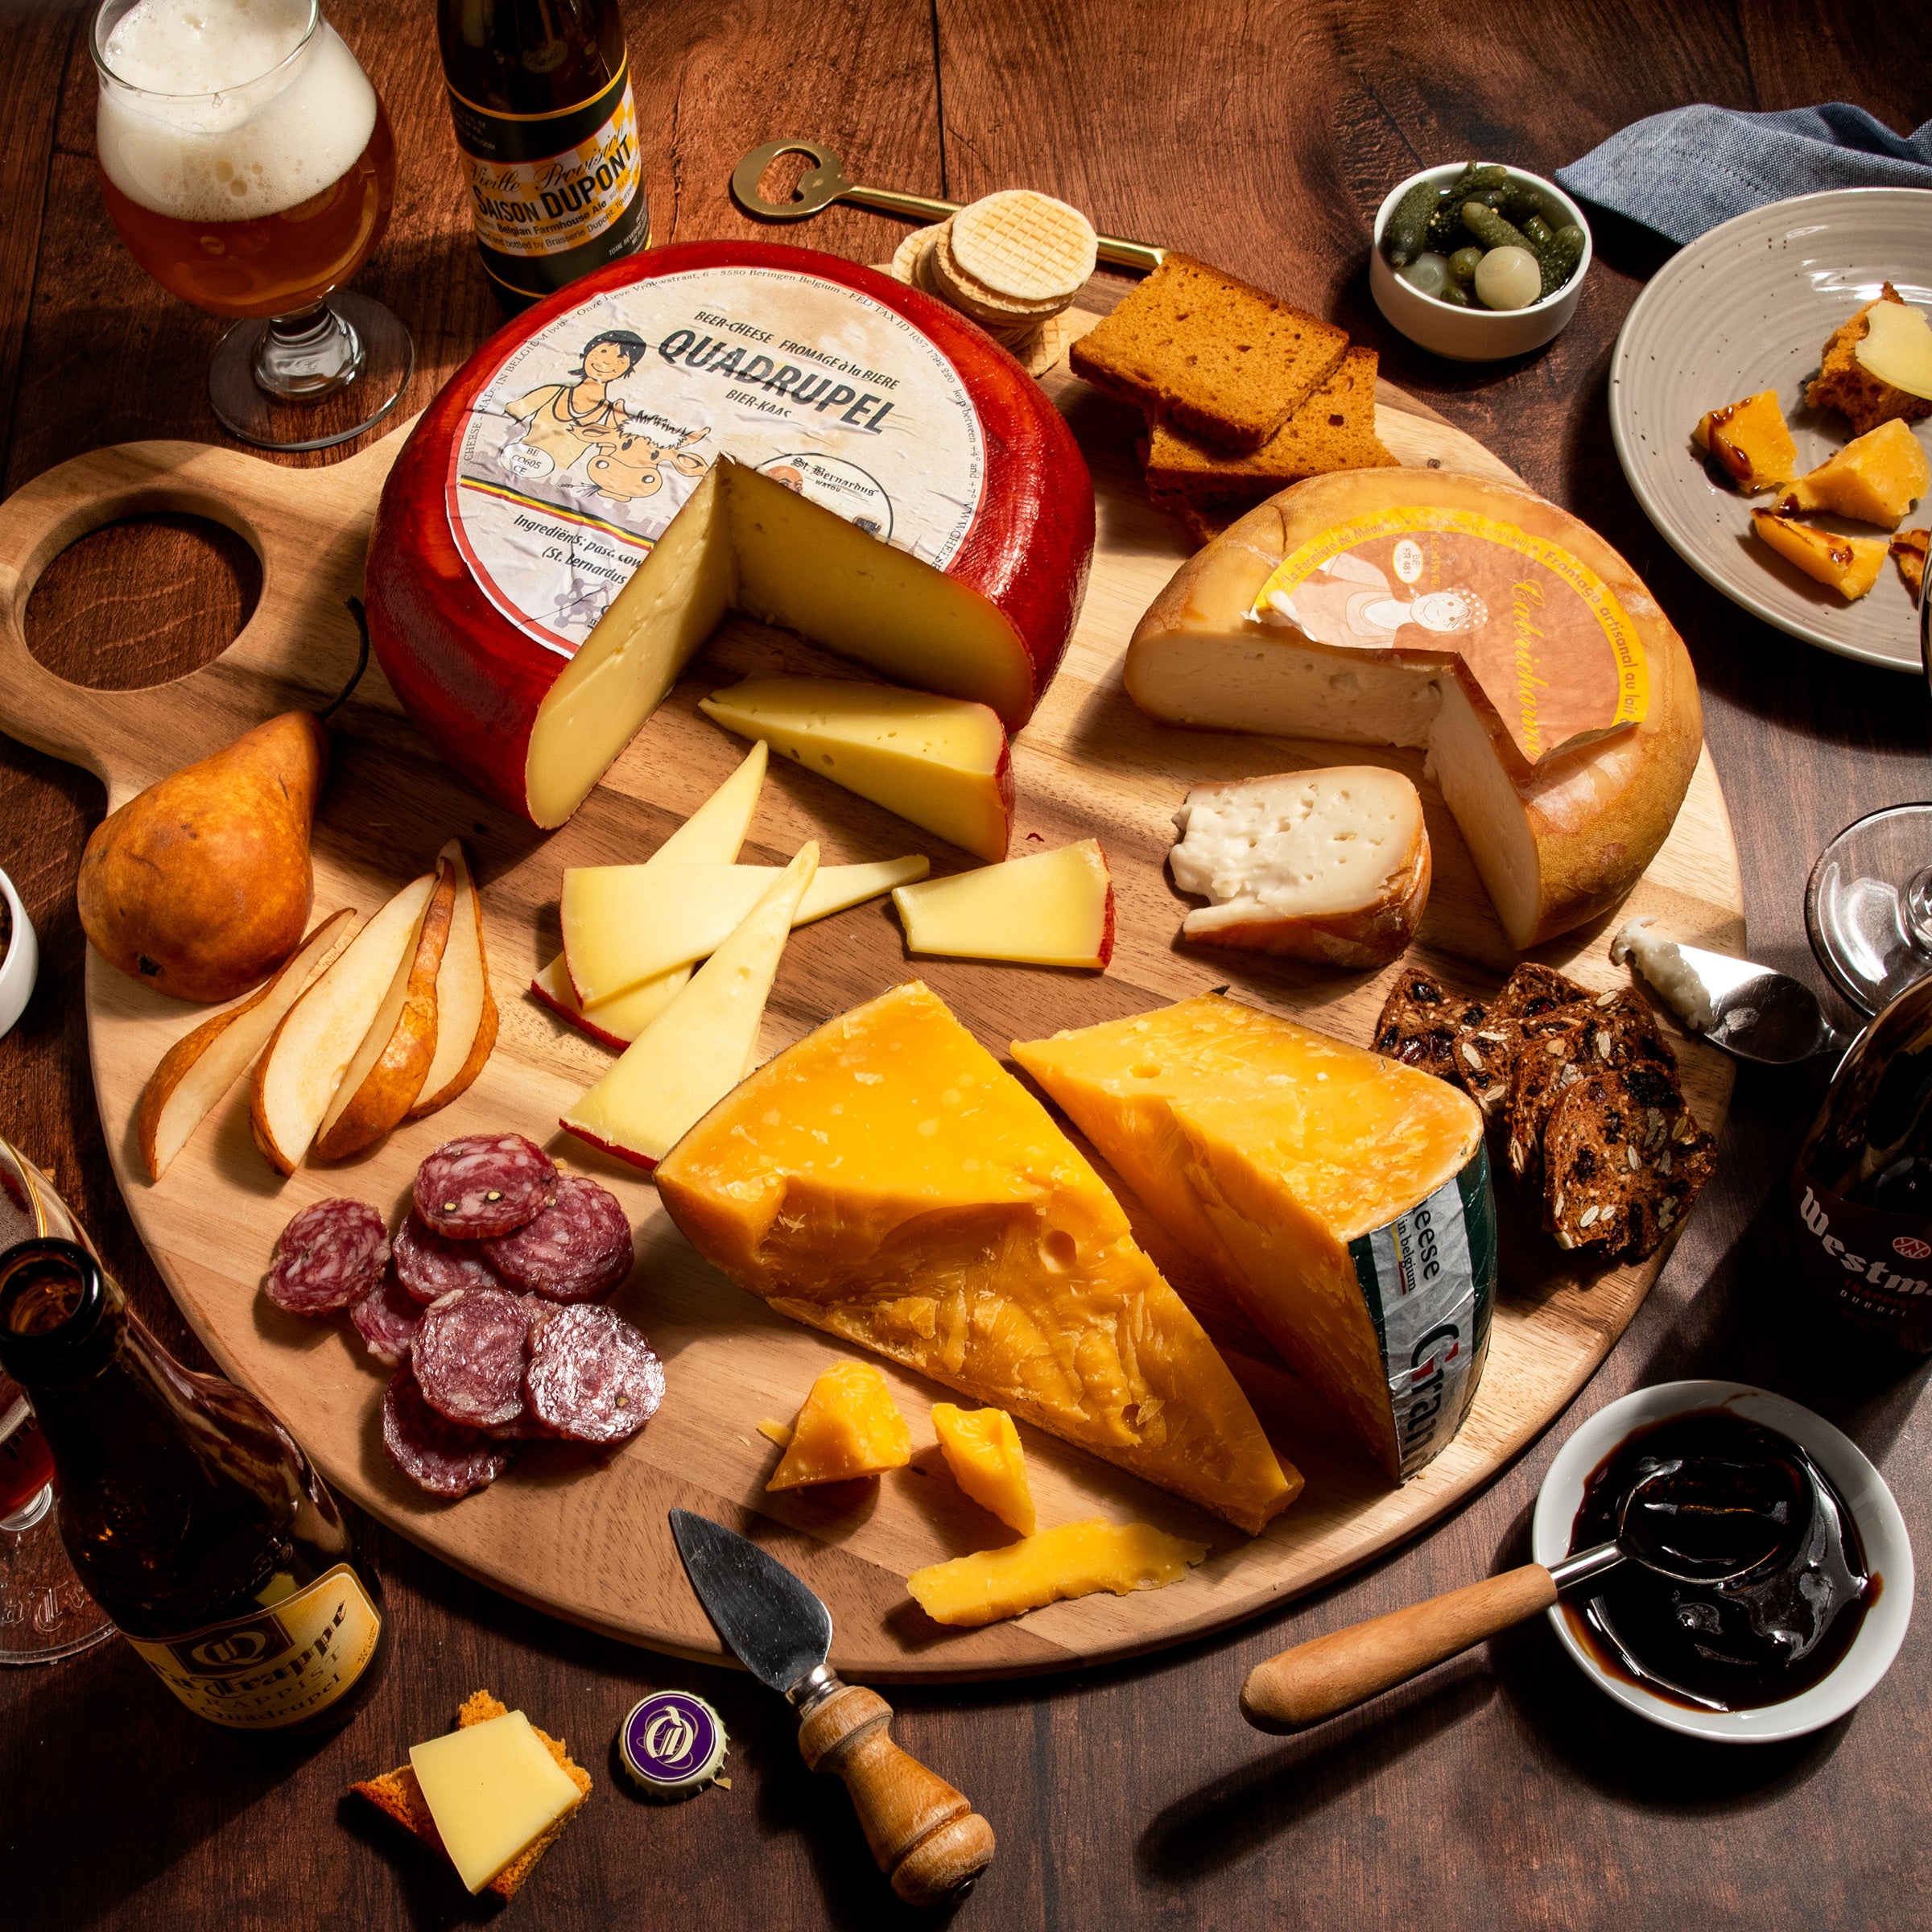 igourmet_15544_Cabricharme Belgian Raw Goat’s Milk Cheese_Cheese